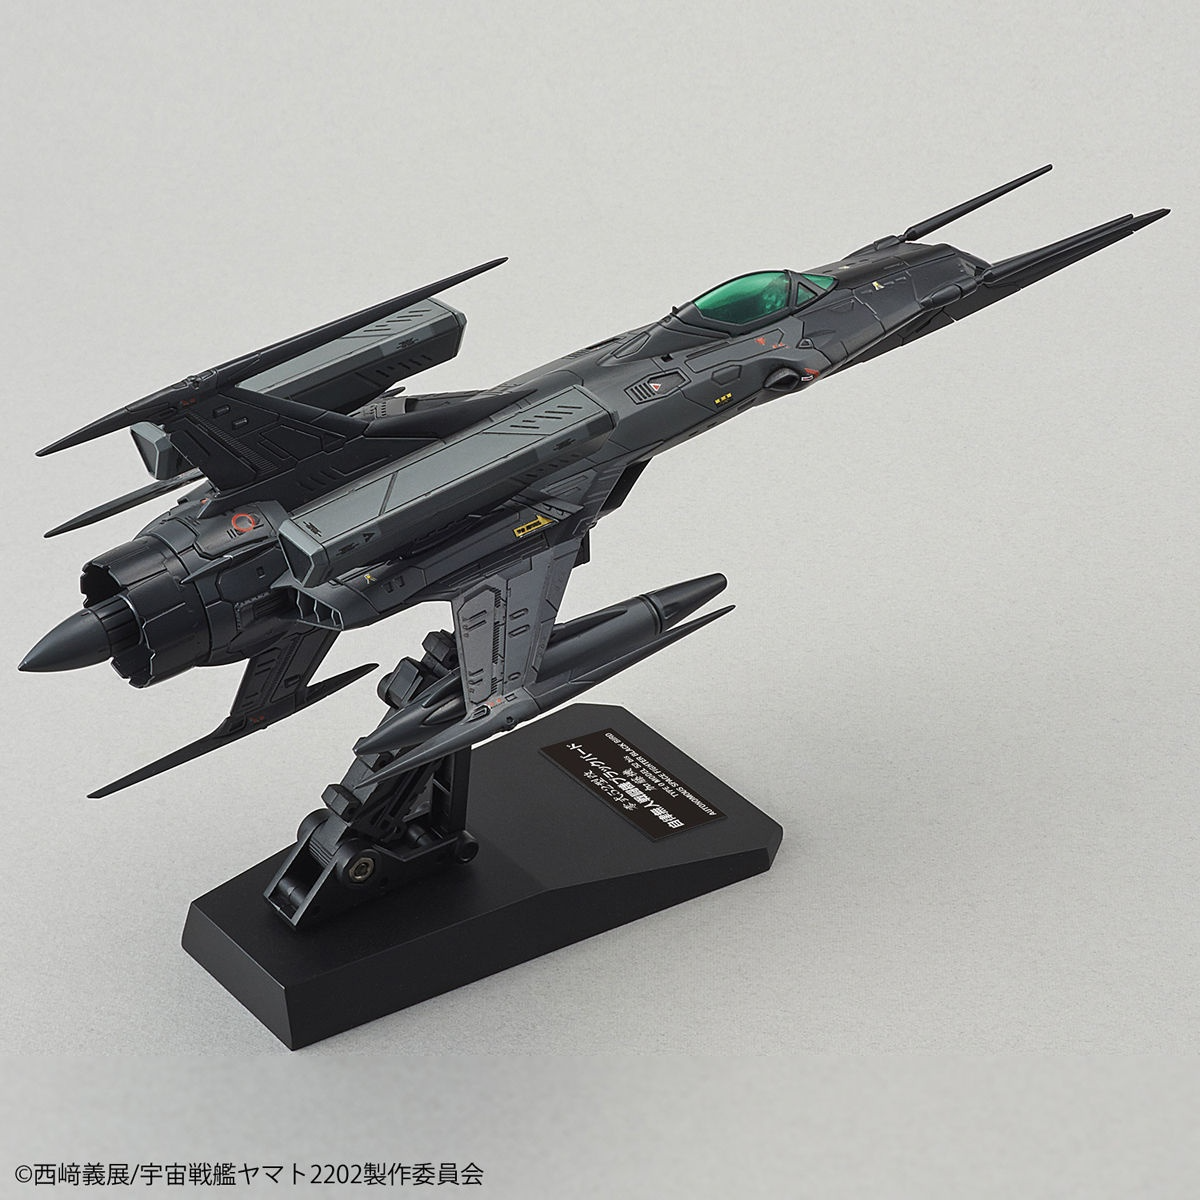 Star Blazers: Space Battleship Yamato 2199 1/72 TYPE 0 CARRIER FIGHTER MODEL 52 KAI UNMANNED DRONE BLACKBIRD